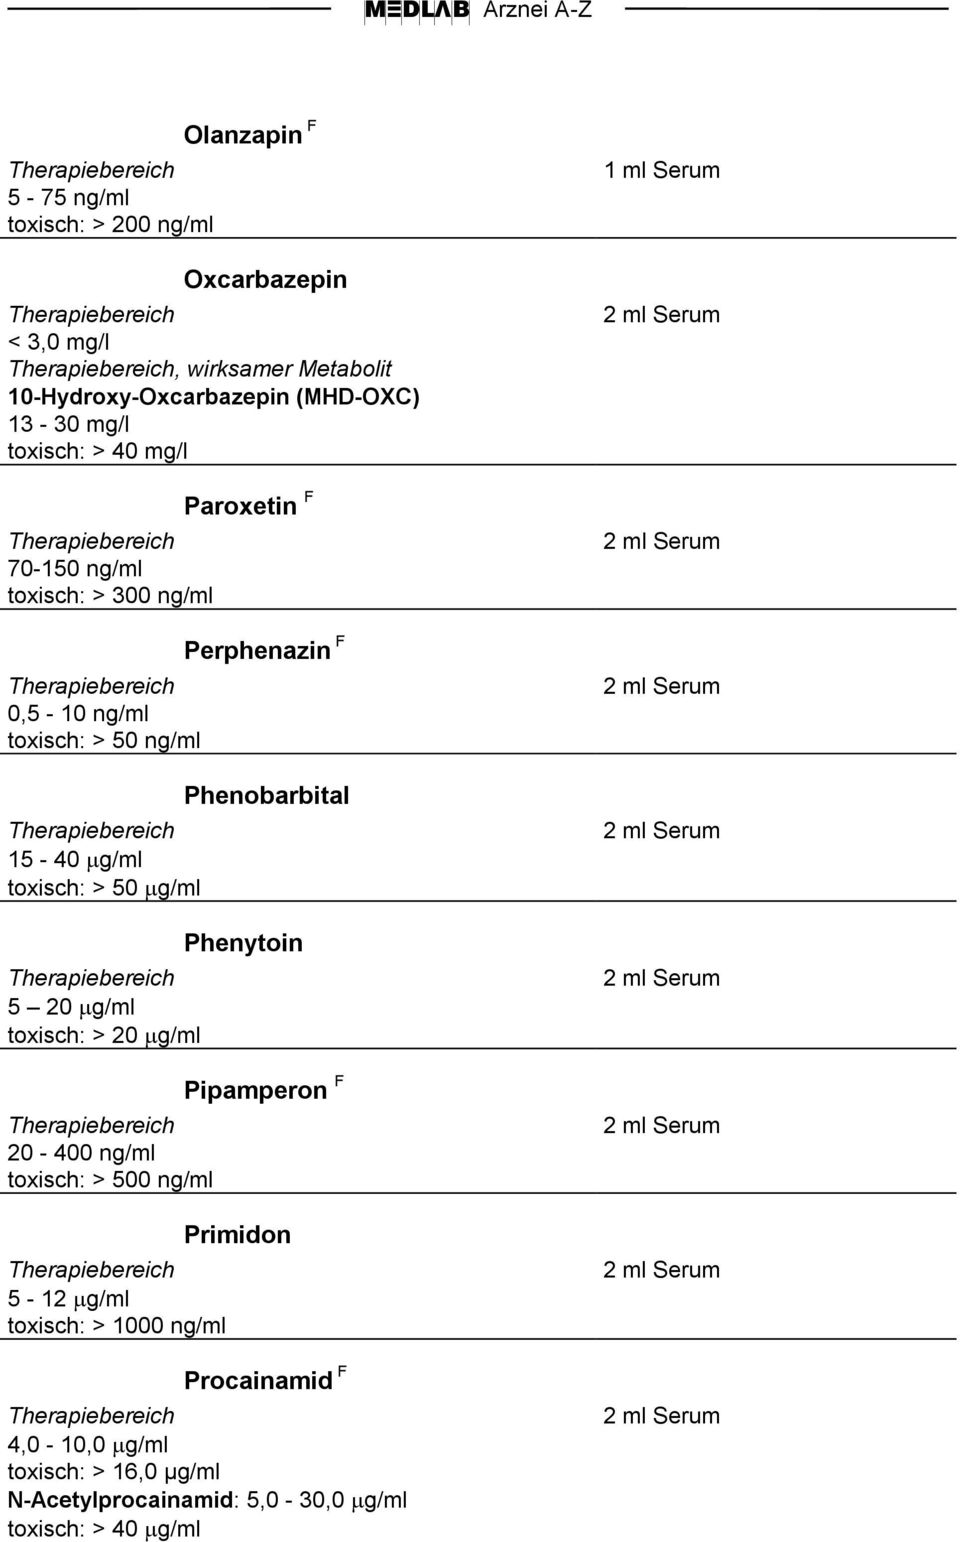 toxisch: > 50 g/ml 5 20 g/ml toxisch: > 20 g/ml 20-400 ng/ml 5-12 g/ml Paroxetin F Perphenazin F Phenobarbital